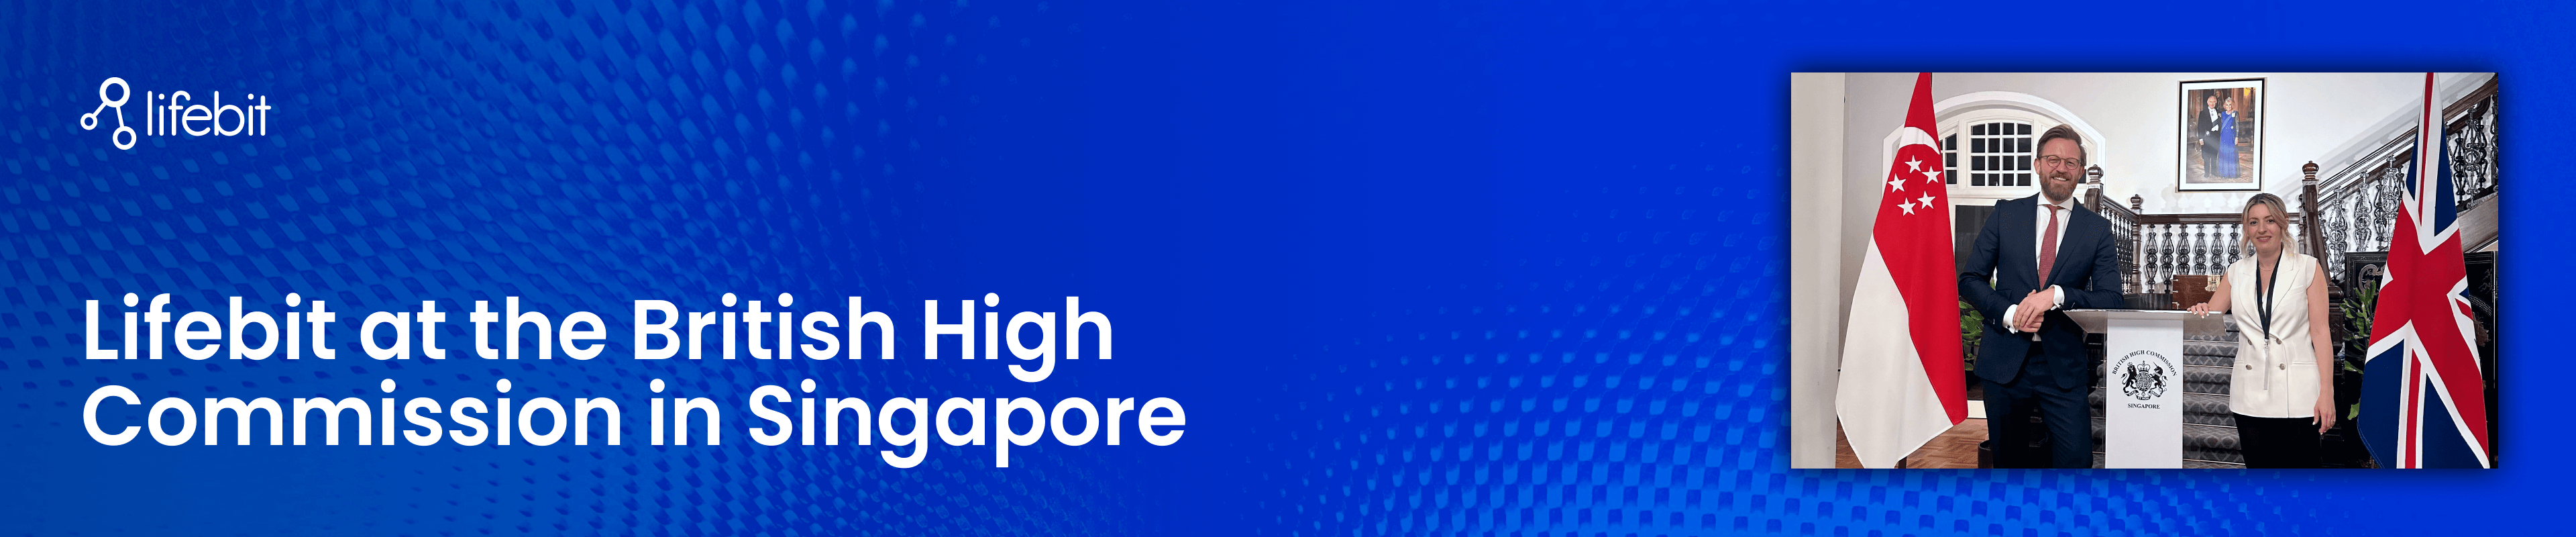 Singapore_British_High_Commission_banner (1)